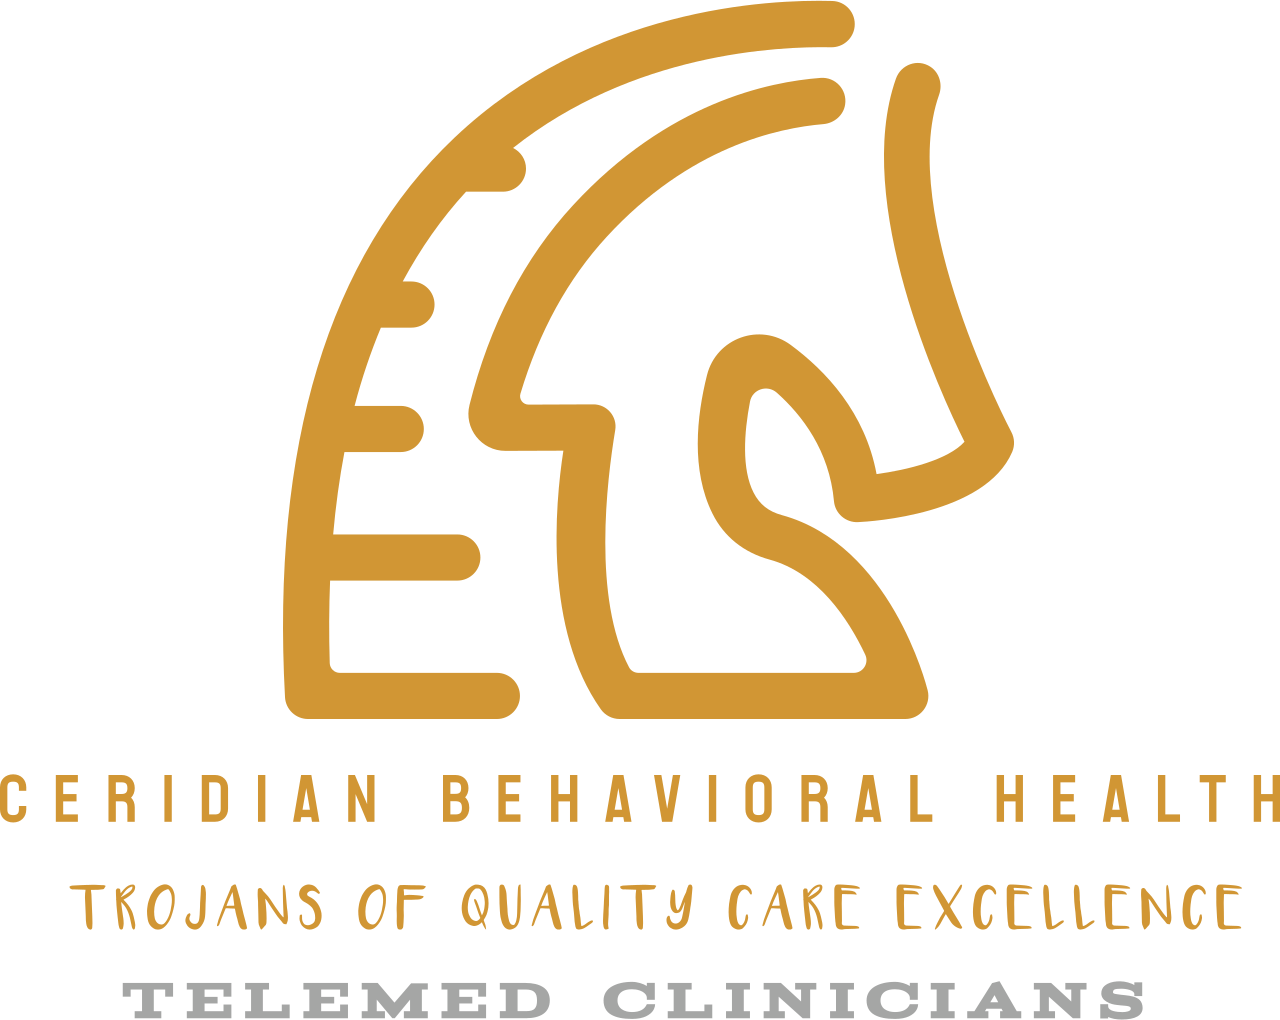 Ceridian Behavioral Health's logo